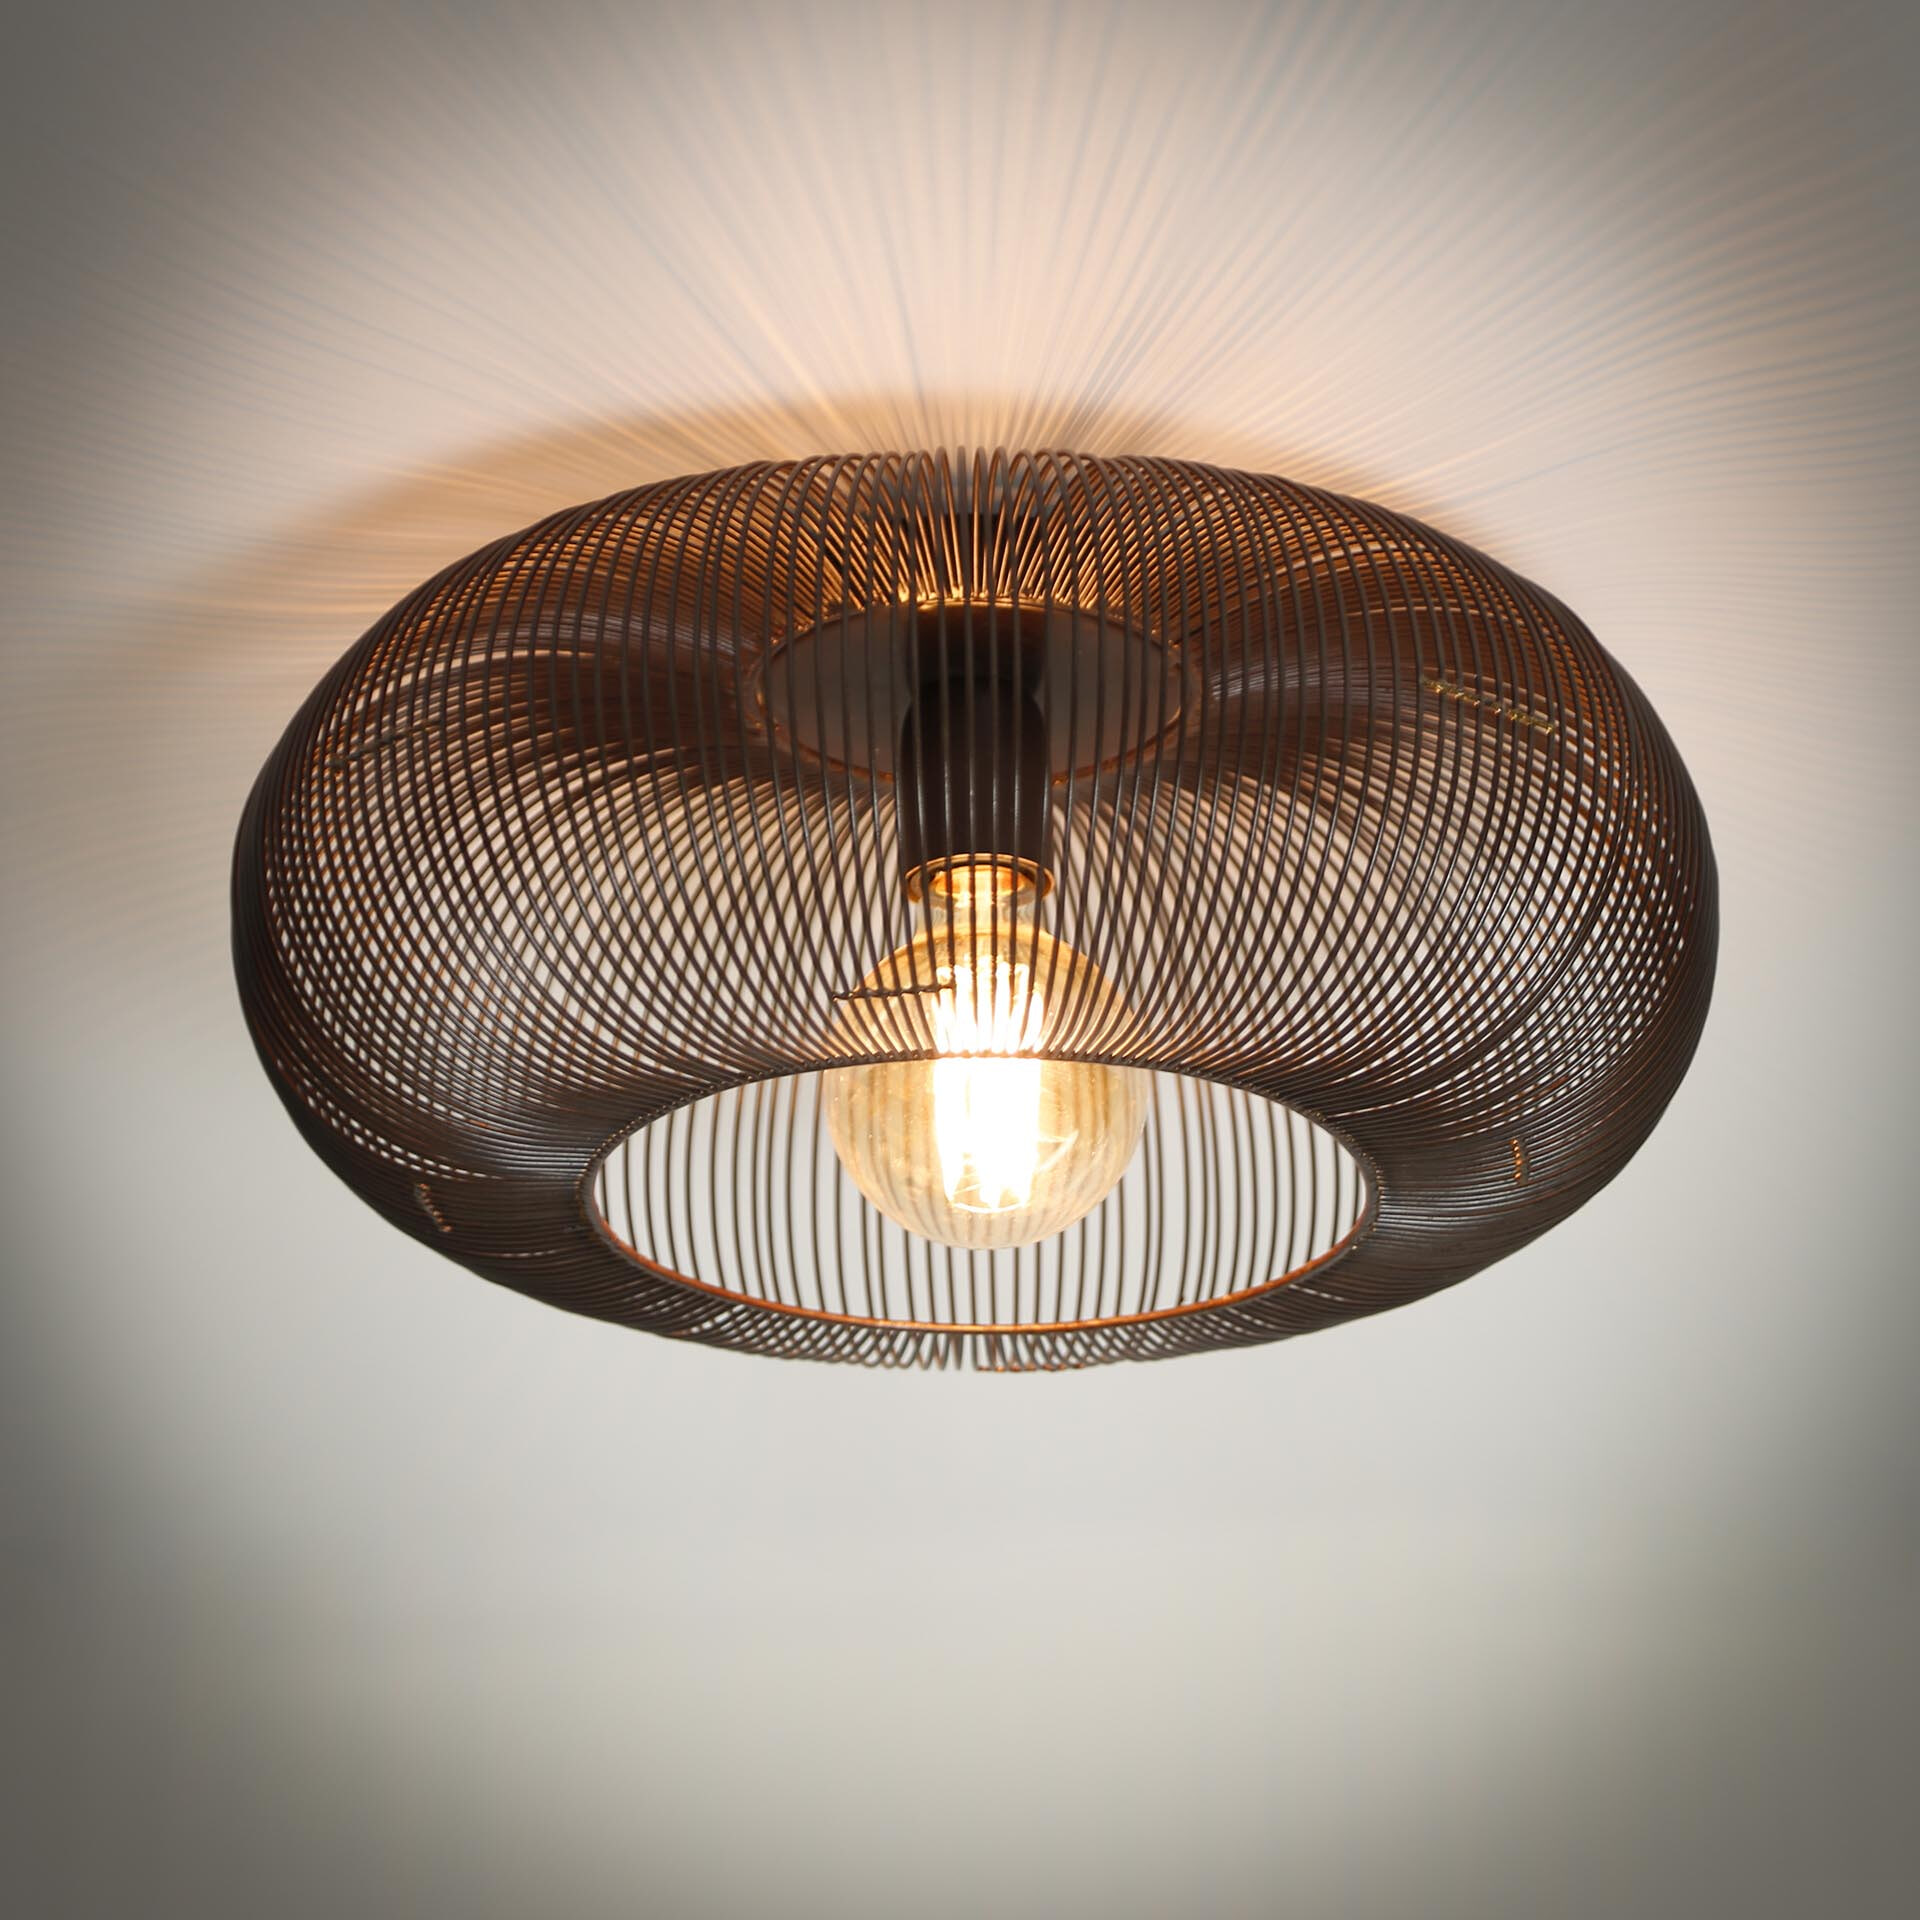 Plafondlamp Mallory Metaal, Ø43cm - Zwart nikkel